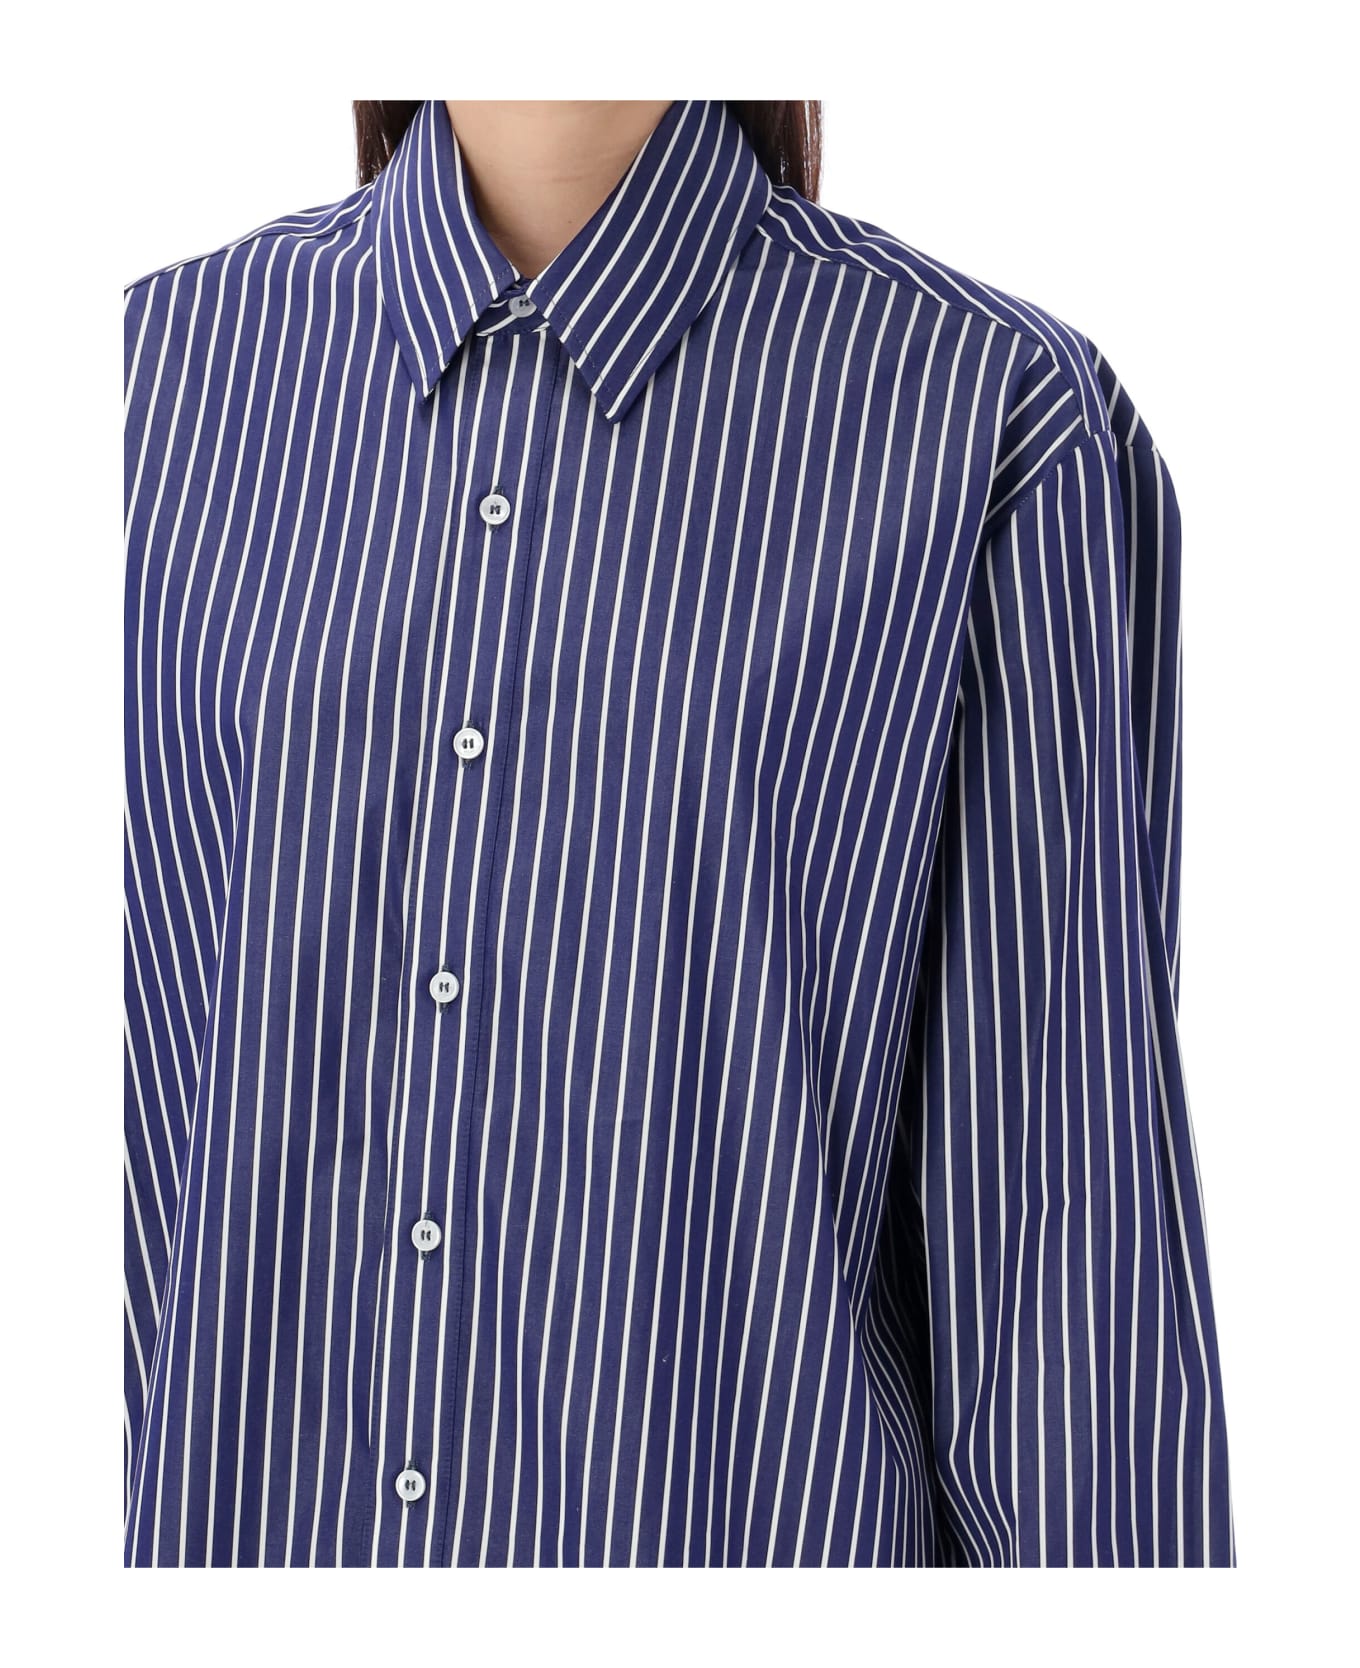 SSHEENA Stripe Shirt Quote Back - LIGHT BLUE STRIPE